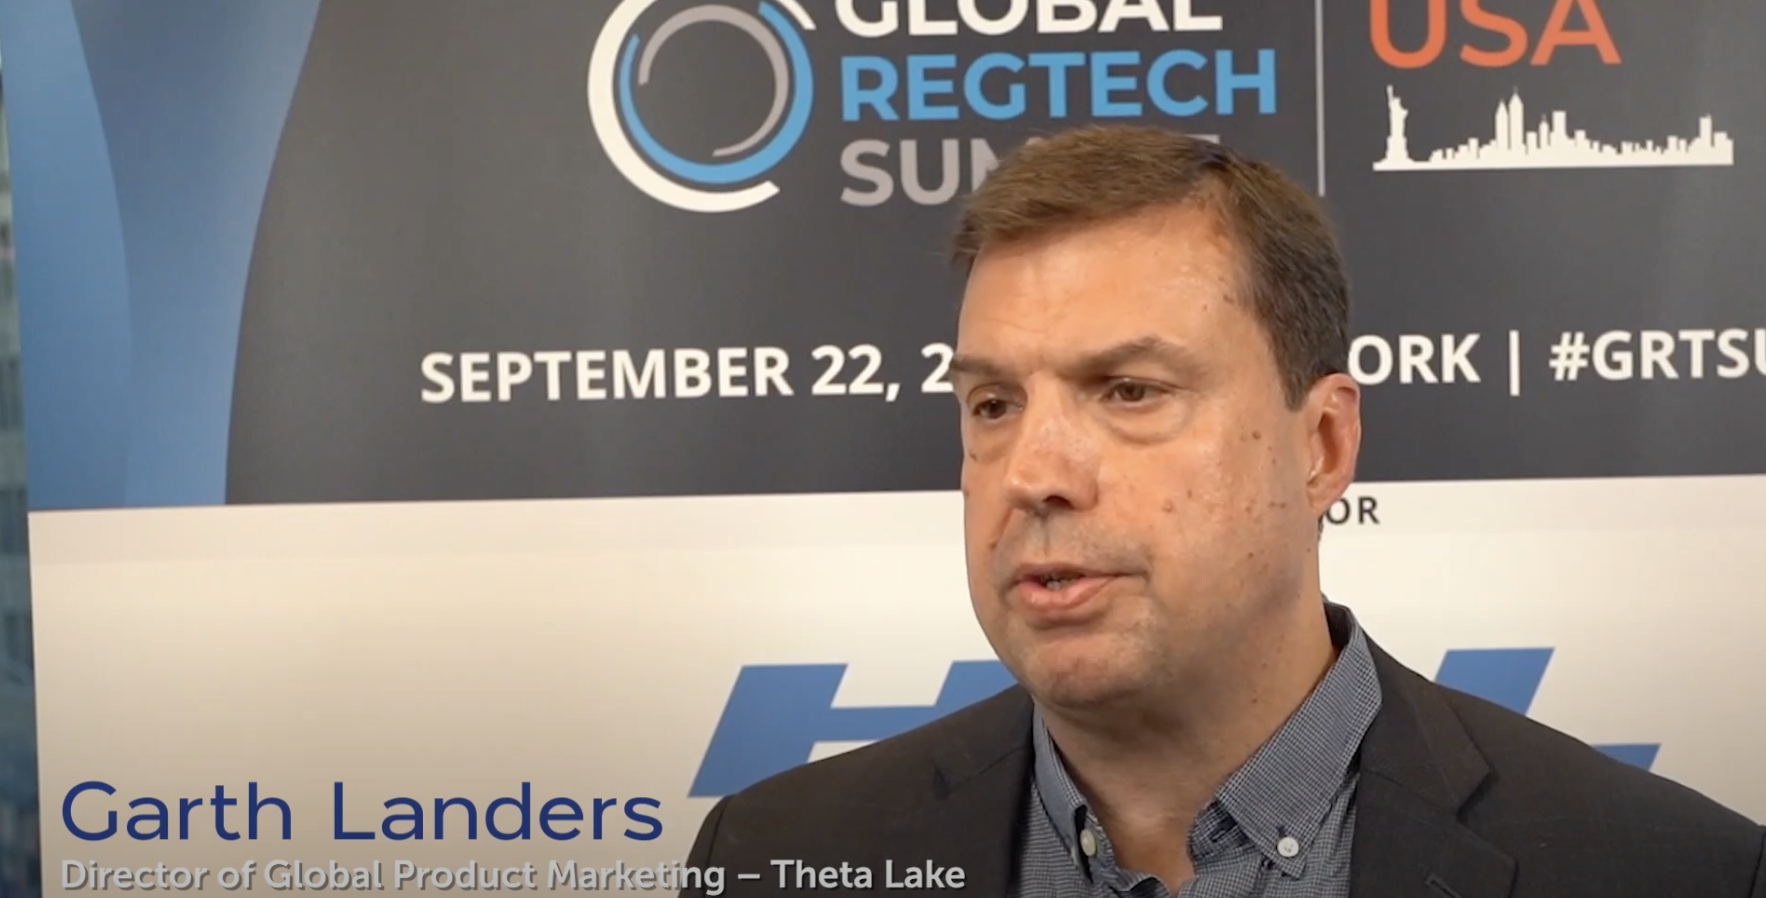 Garth Landers, Director of Global Product Marketing at Theta Lake